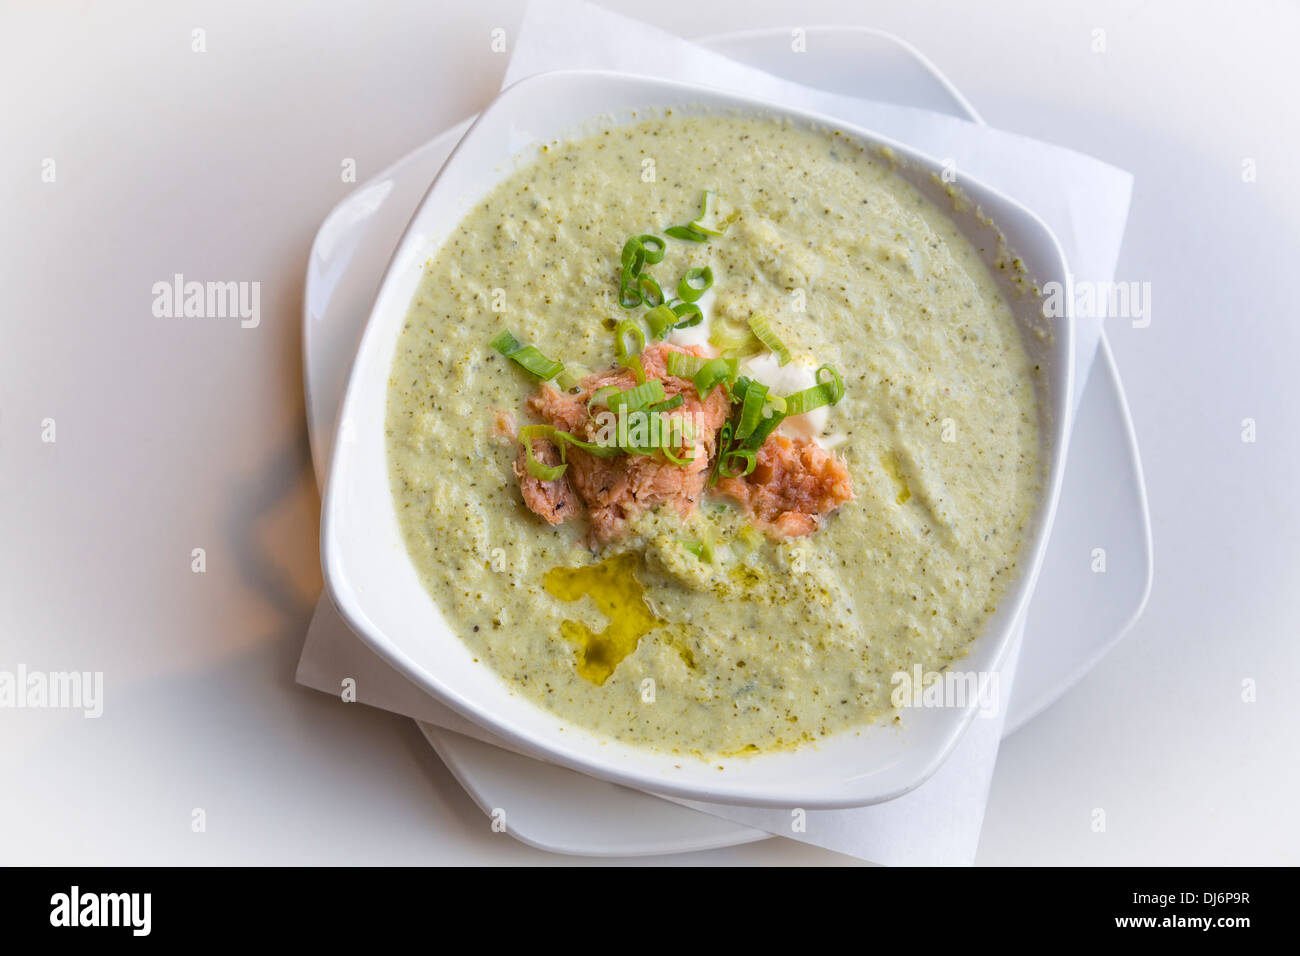 Südafrika, Franschhoek. Brokkoli-Pilz-Suppe mit Lachs und Sahne. Stockfoto